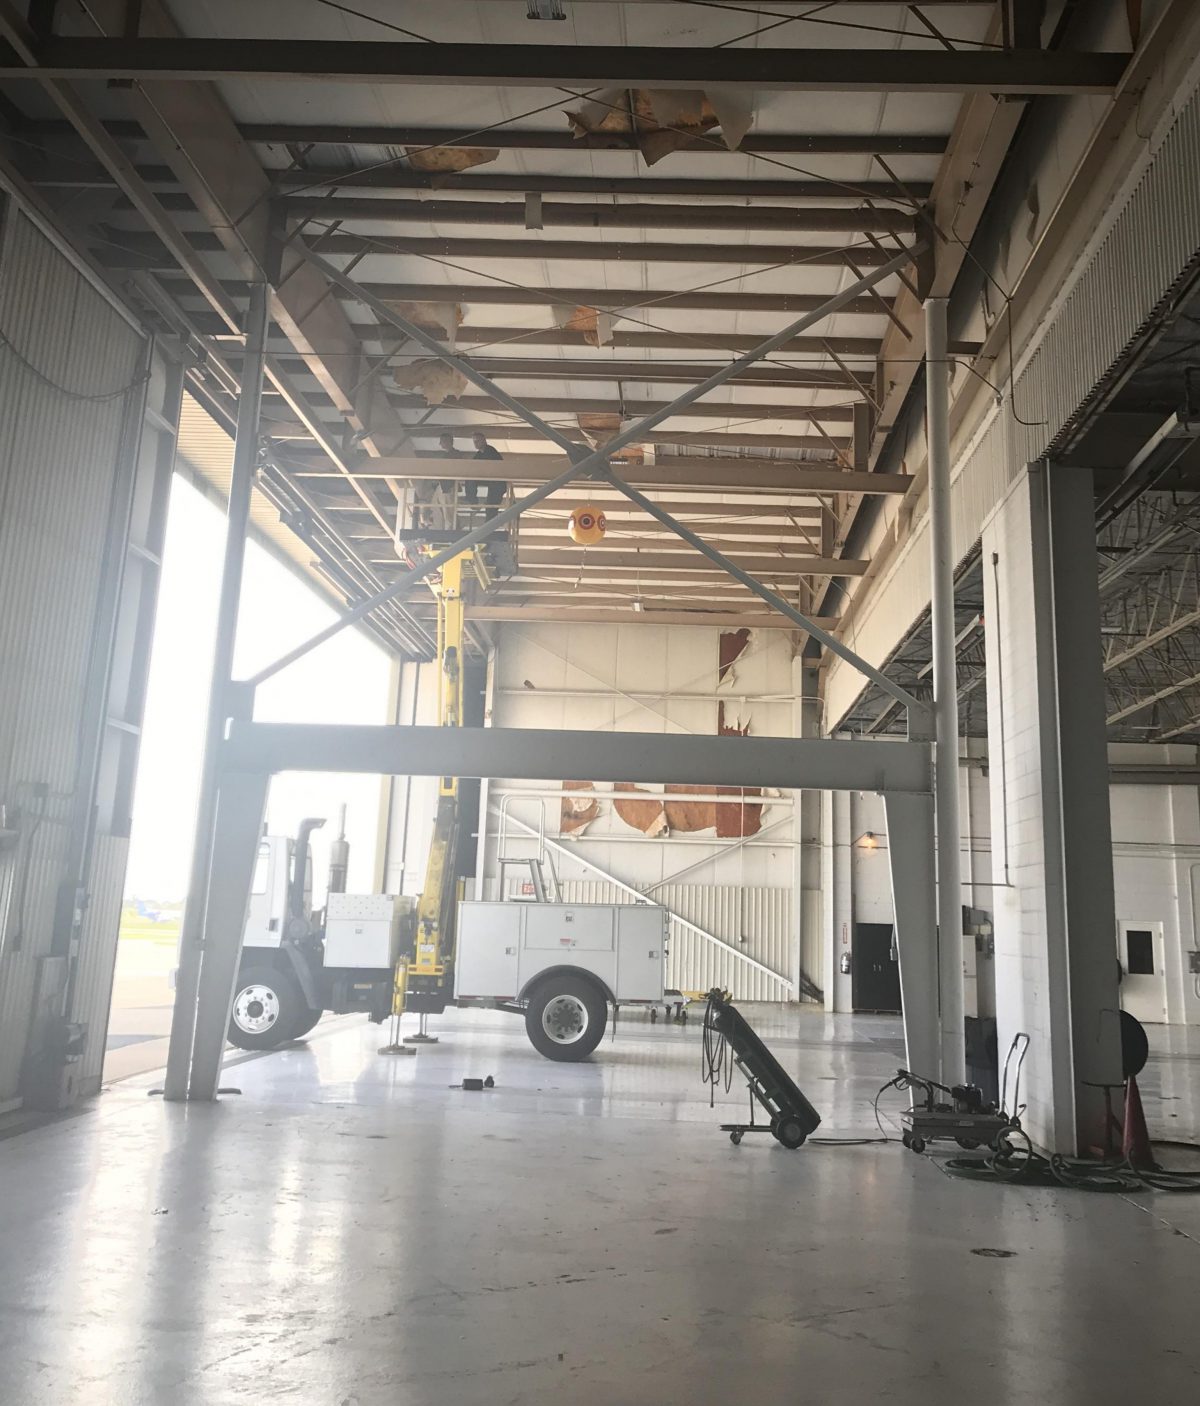 Inspection of Hangar Roof Framing